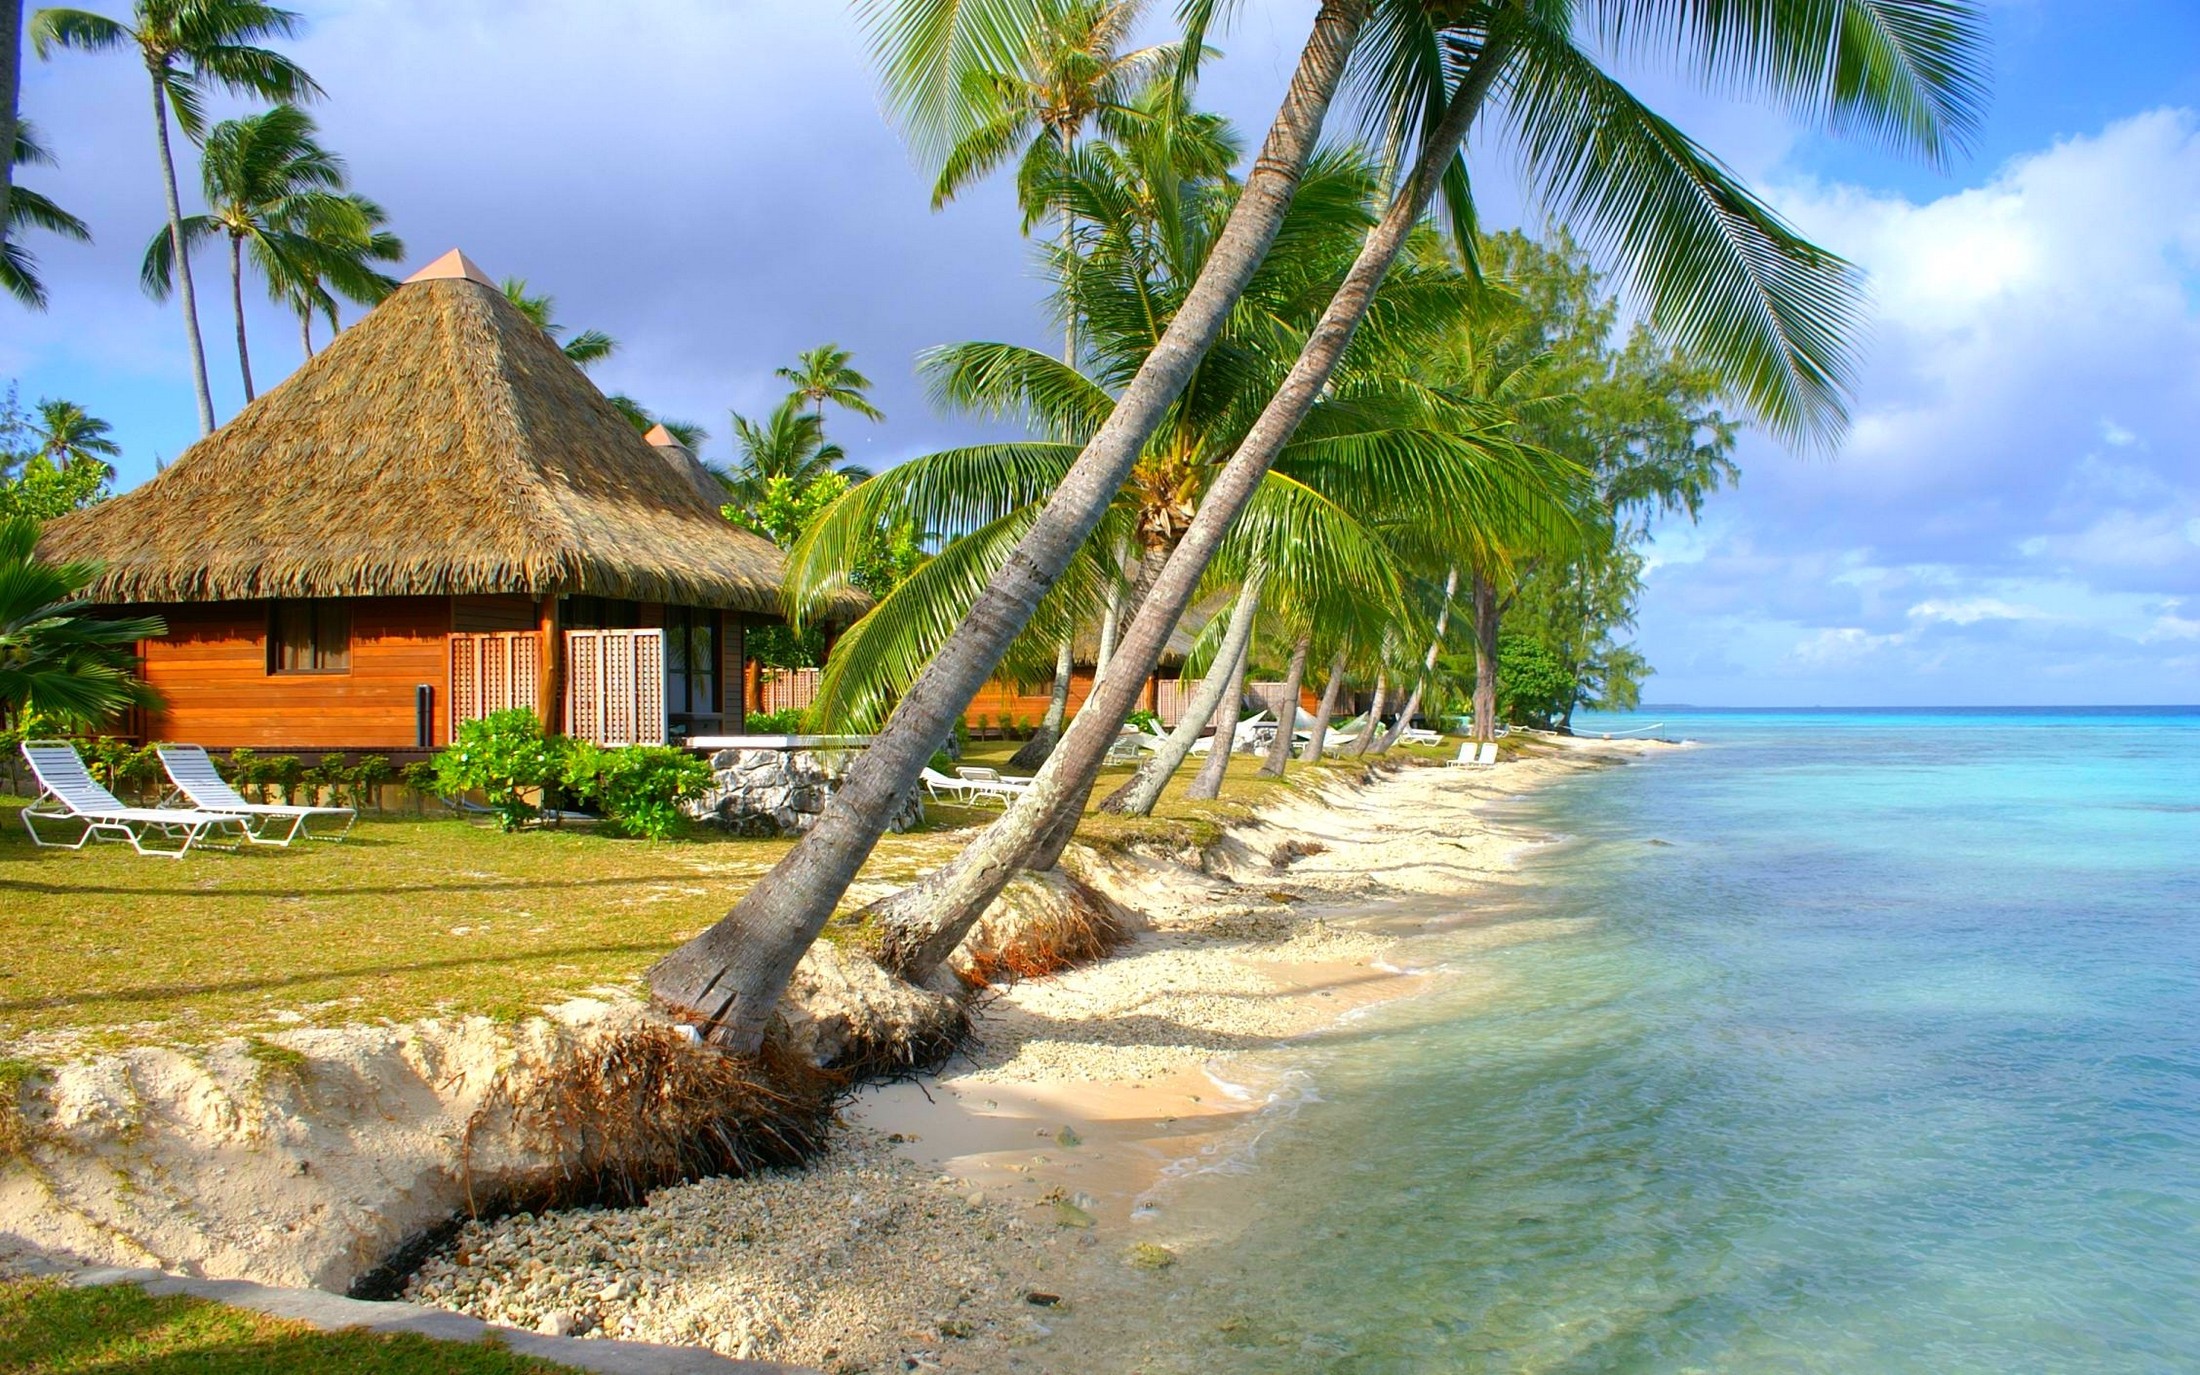 Nature Landscape Tropical Beach Sea Island Palm Trees